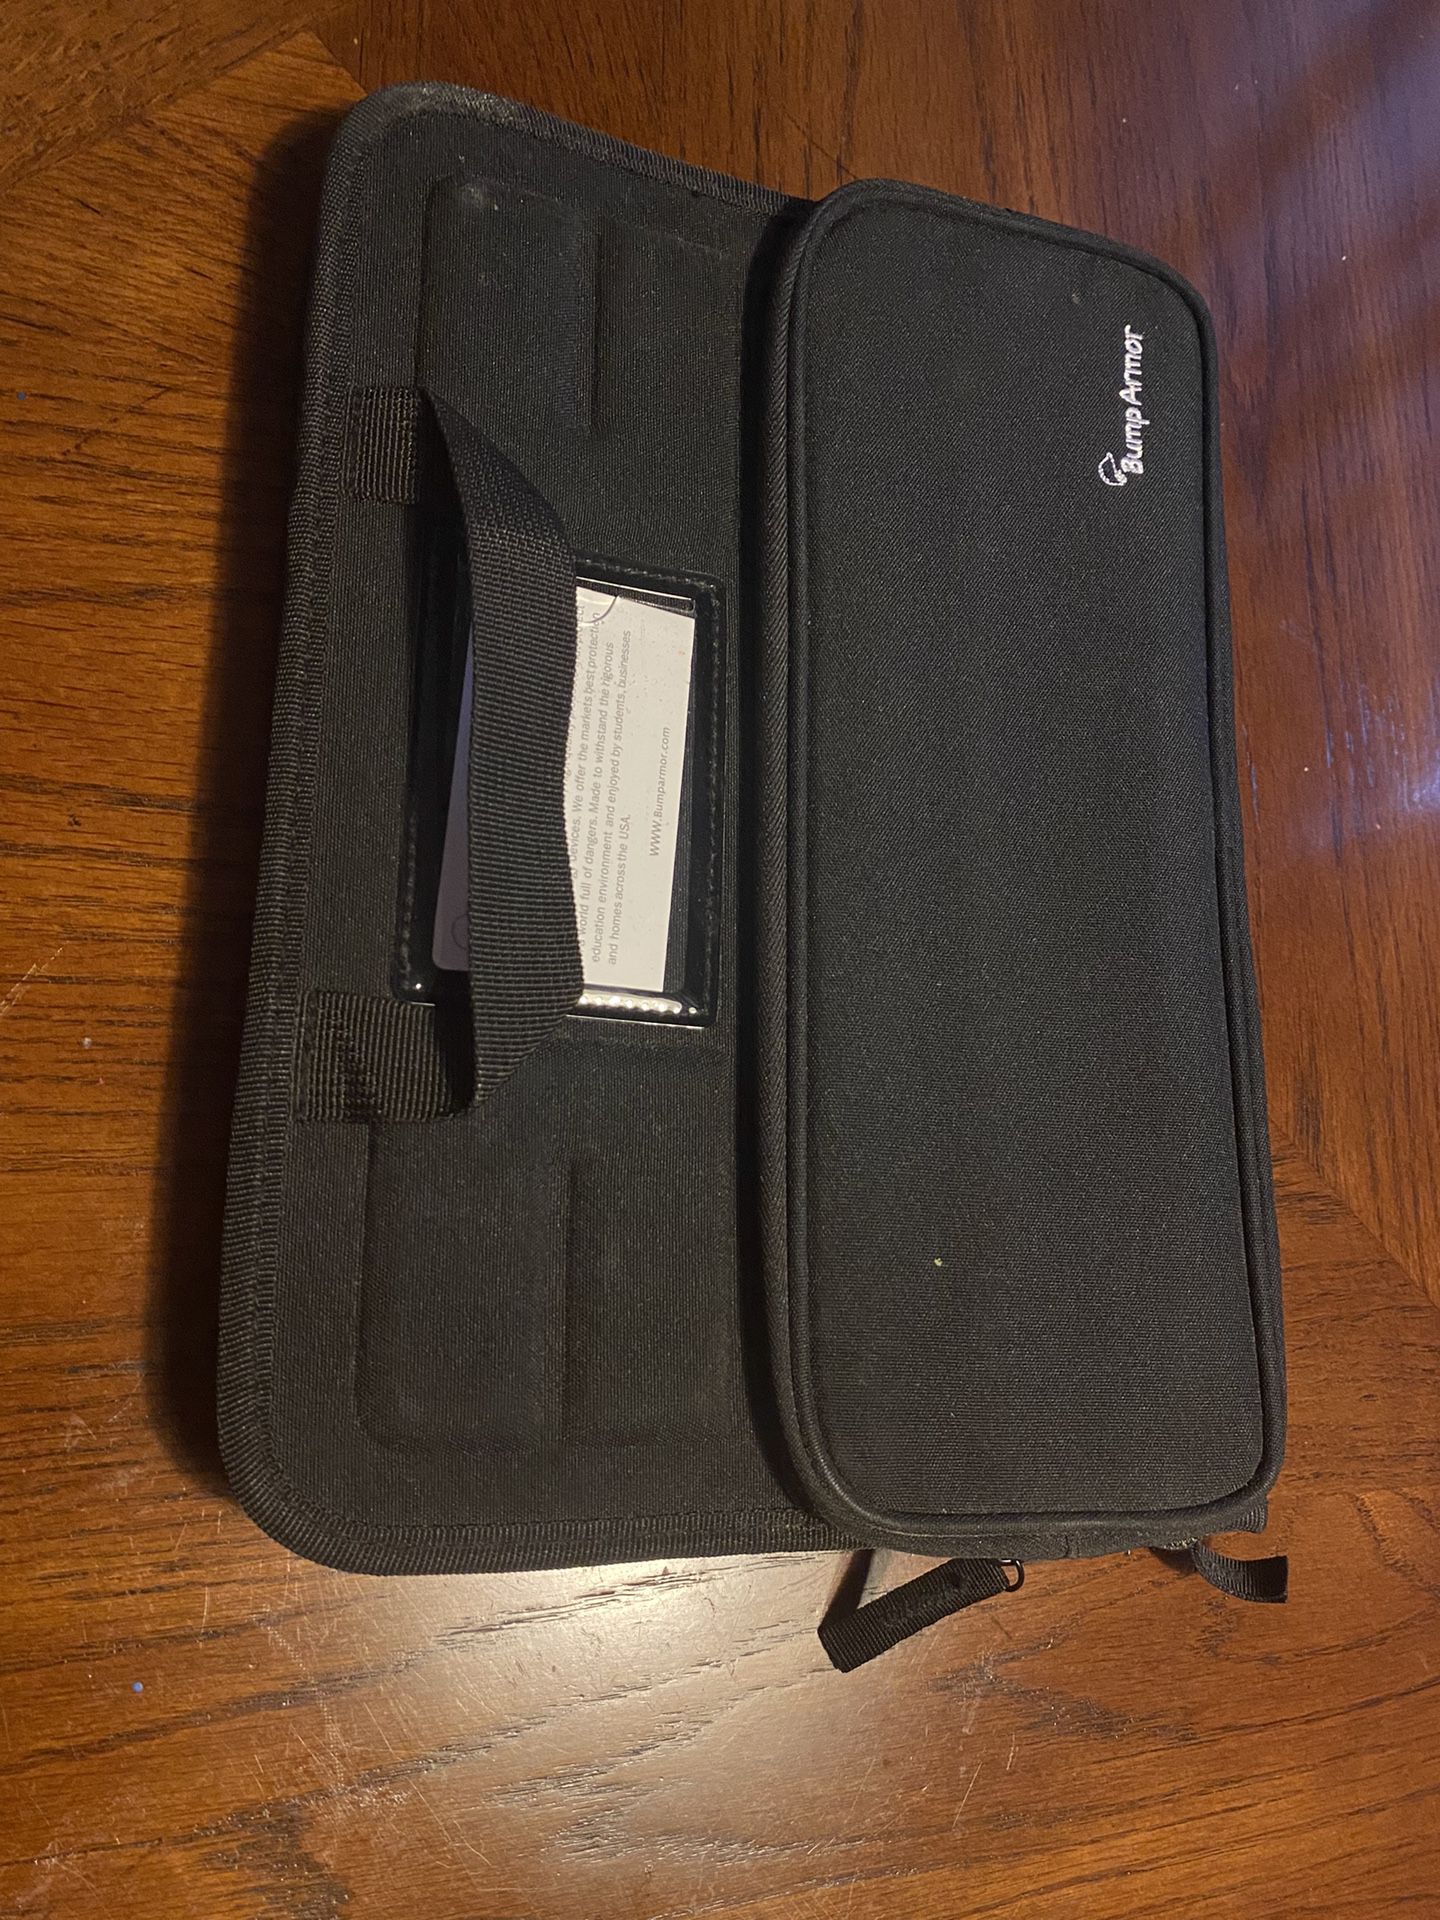 Chromebook case 